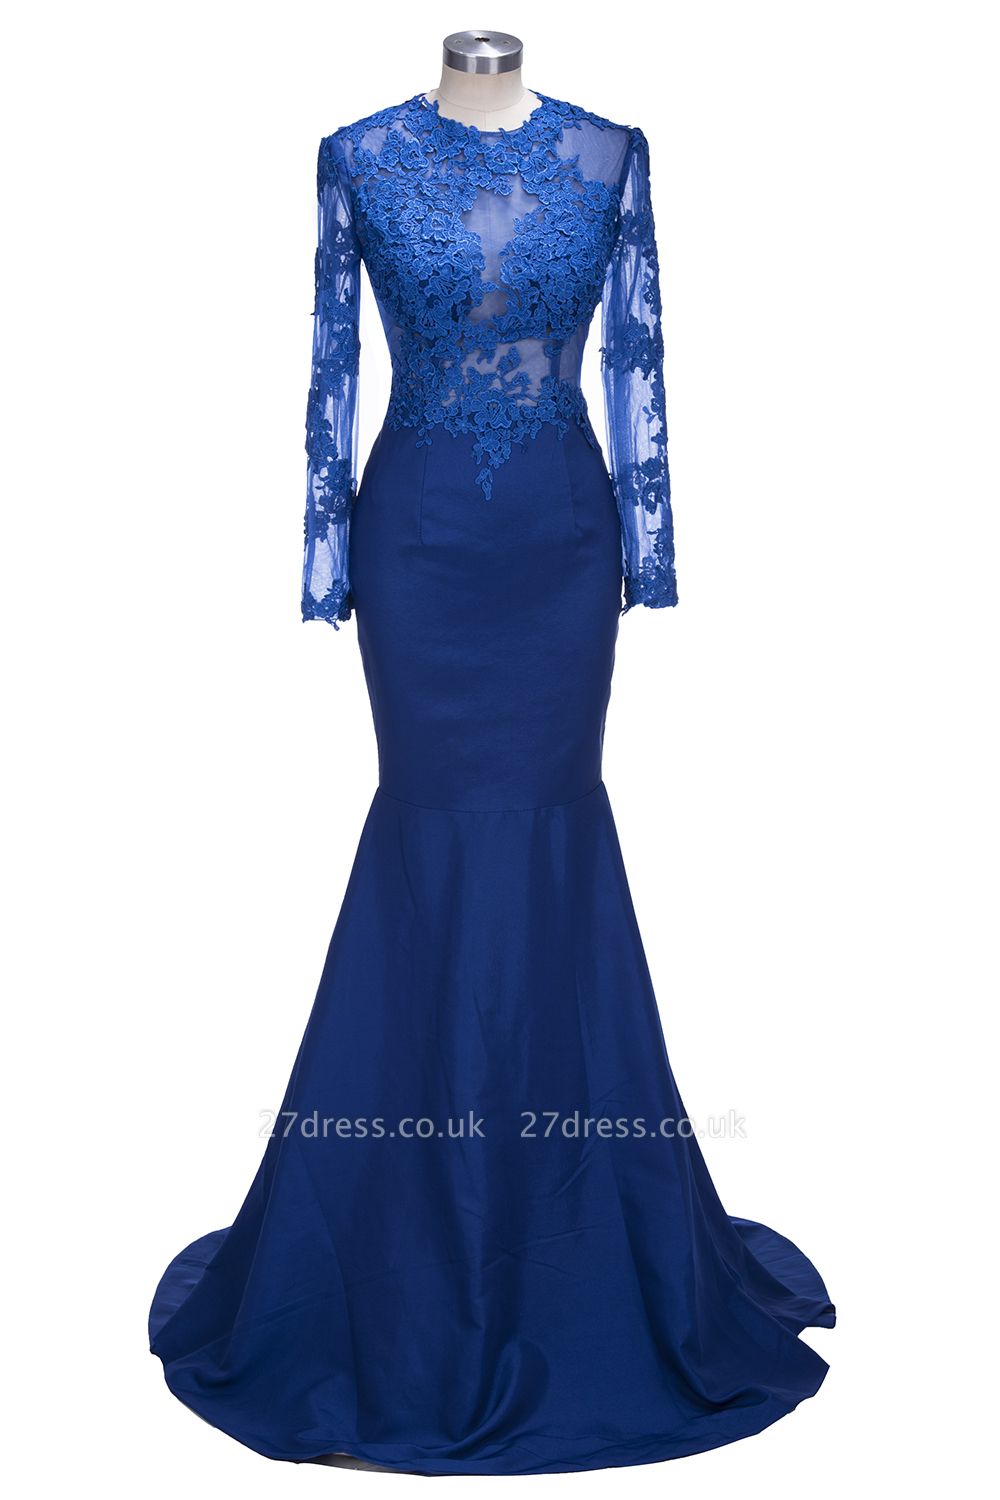 Delicate Royal Blue Lace Appliques Evening Dress UK Mermaid Long Sleeve